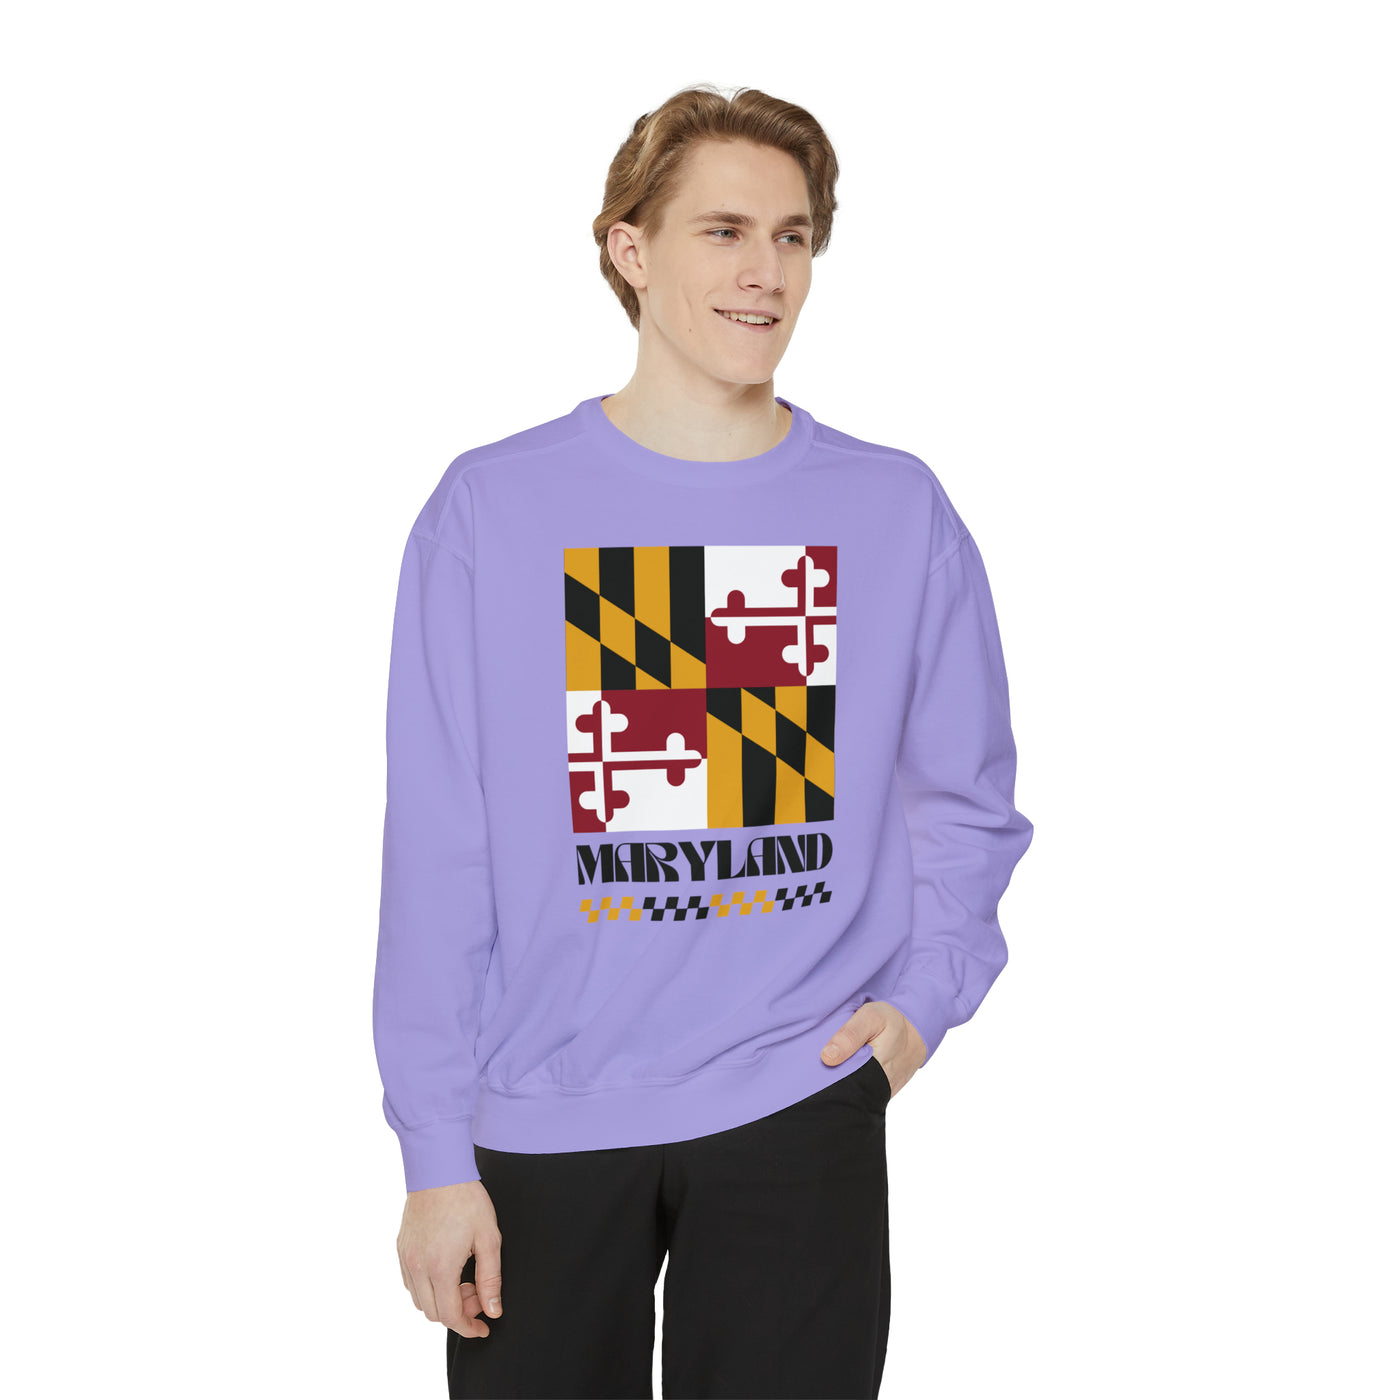 Maryland Retro Sweatshirt